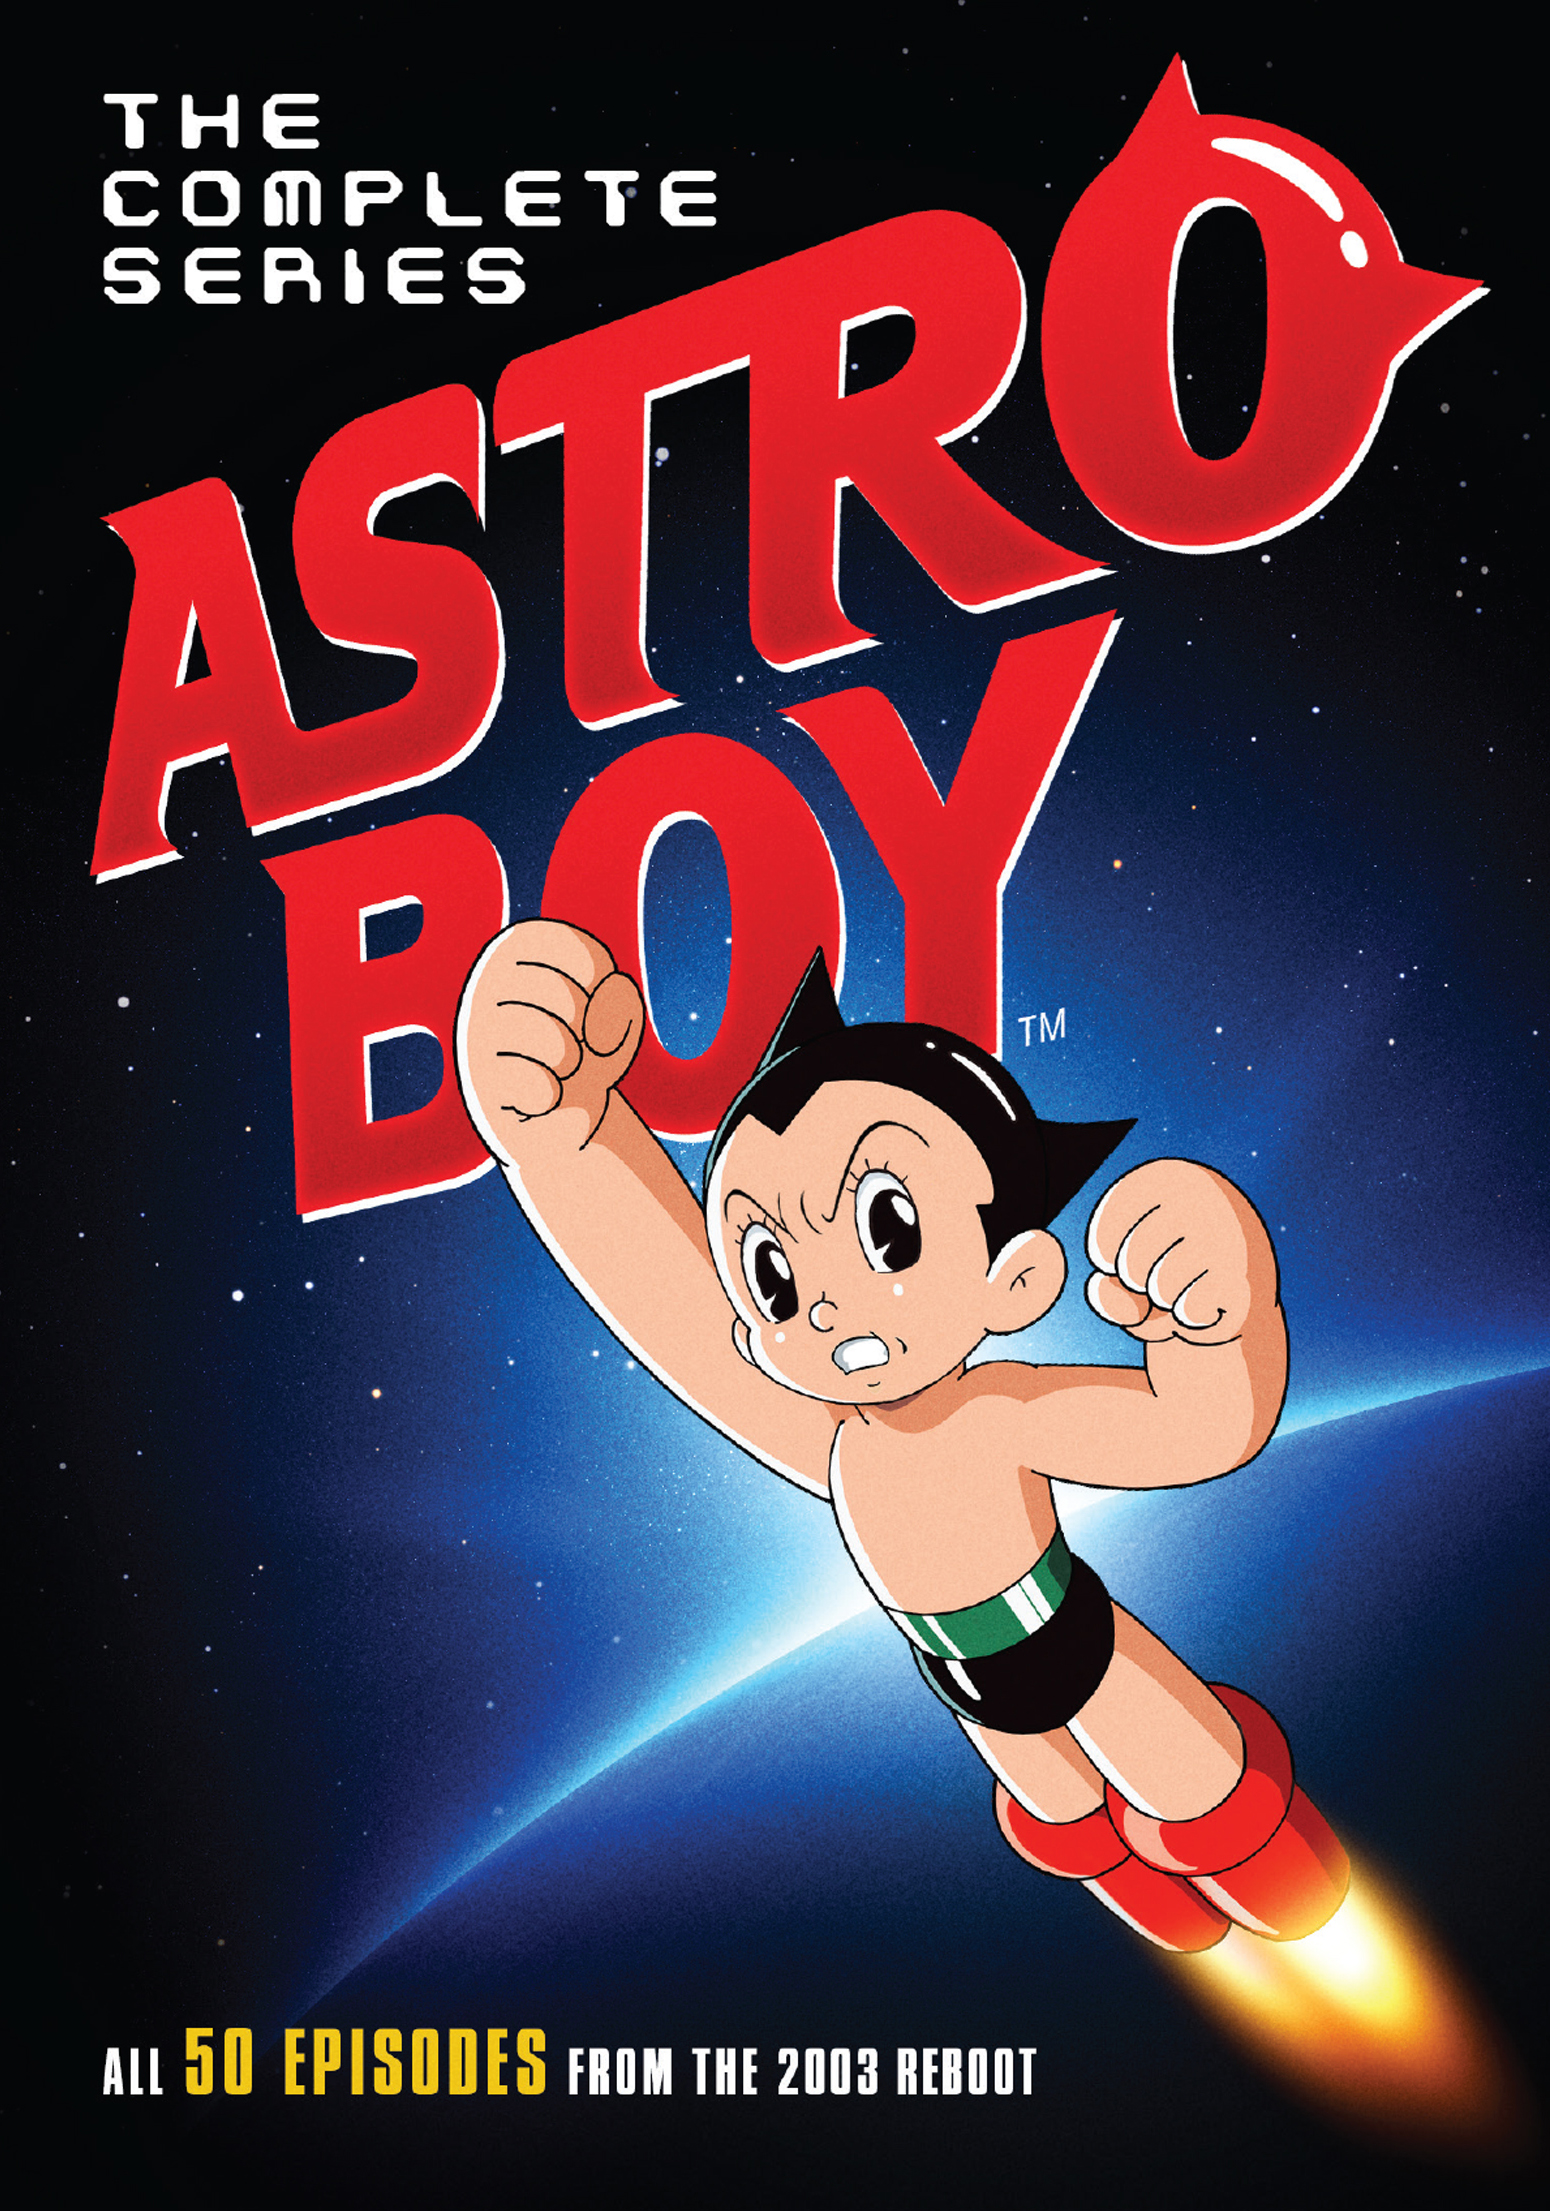 Astro Boy - Buy when it's cheap on iTunes